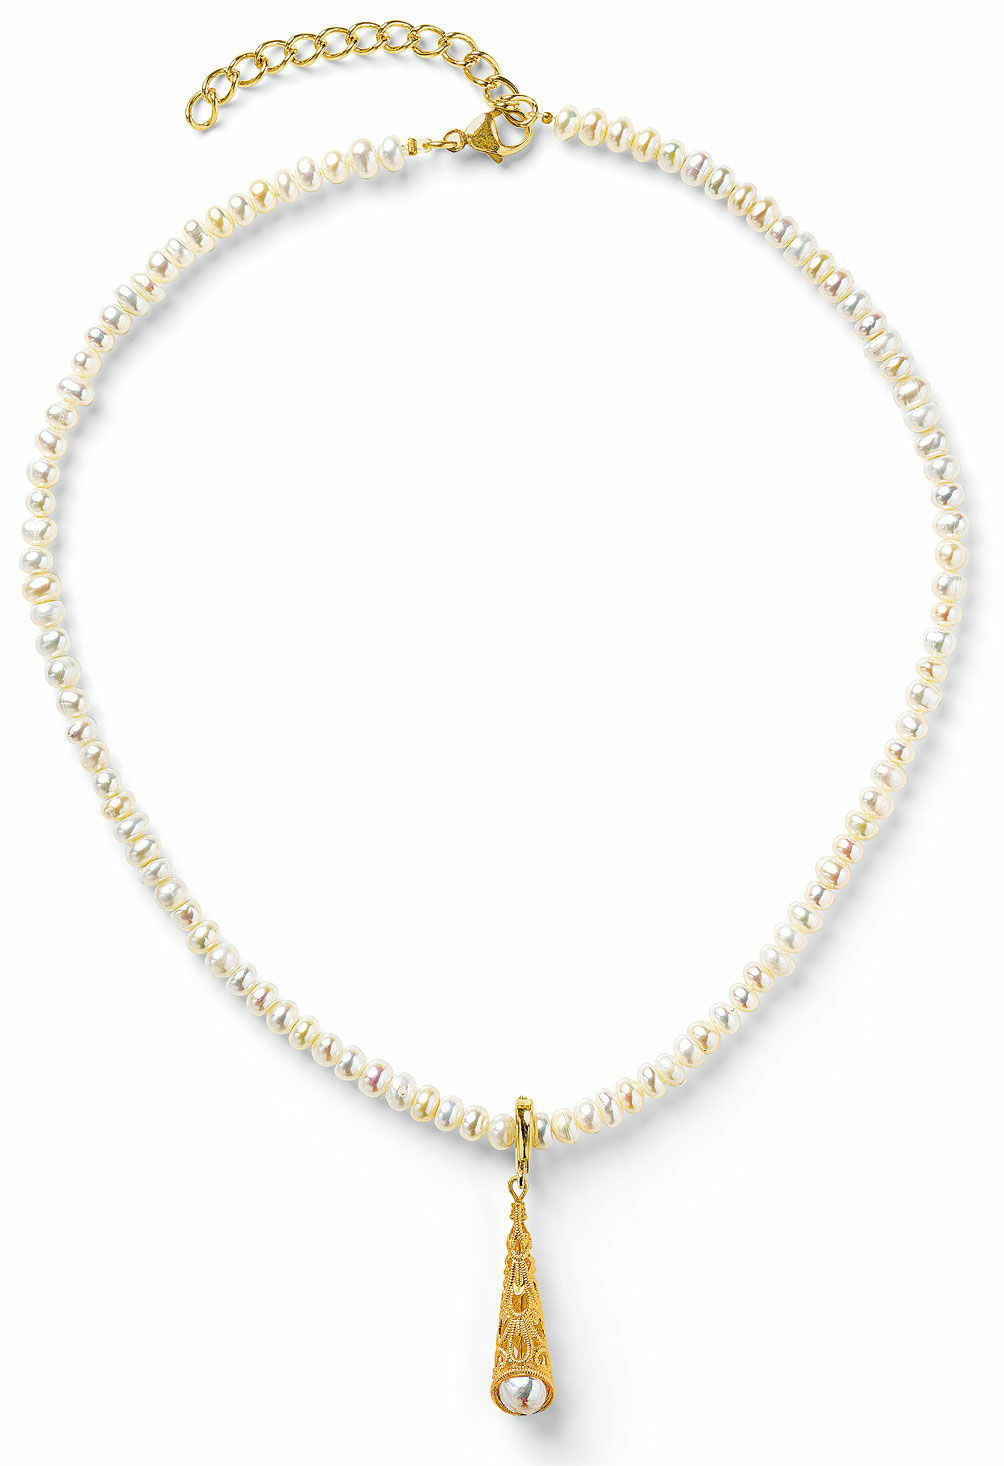 Pearl necklace "Sophia" by Petra Waszak